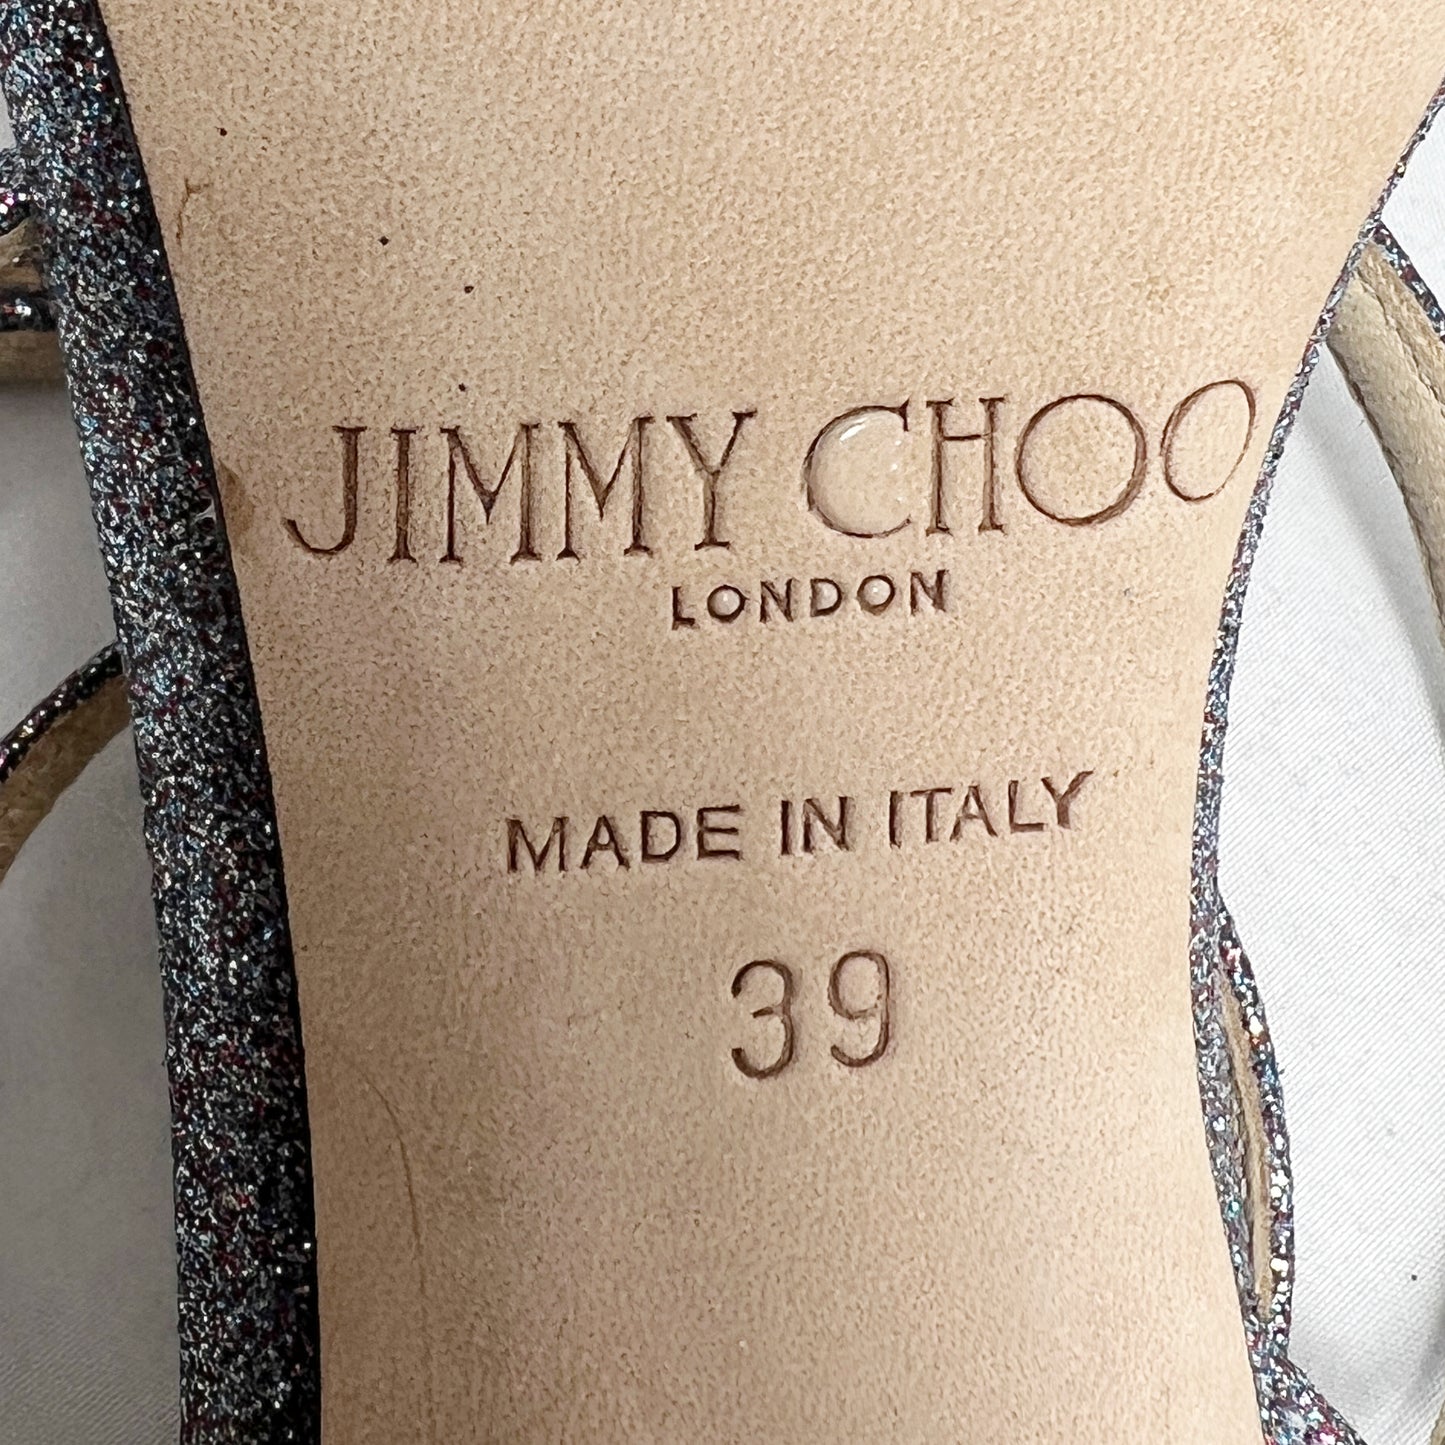 Jimmy Choo Mimi Silver Glitter Iridescent Strappy Sandals Size EU 39